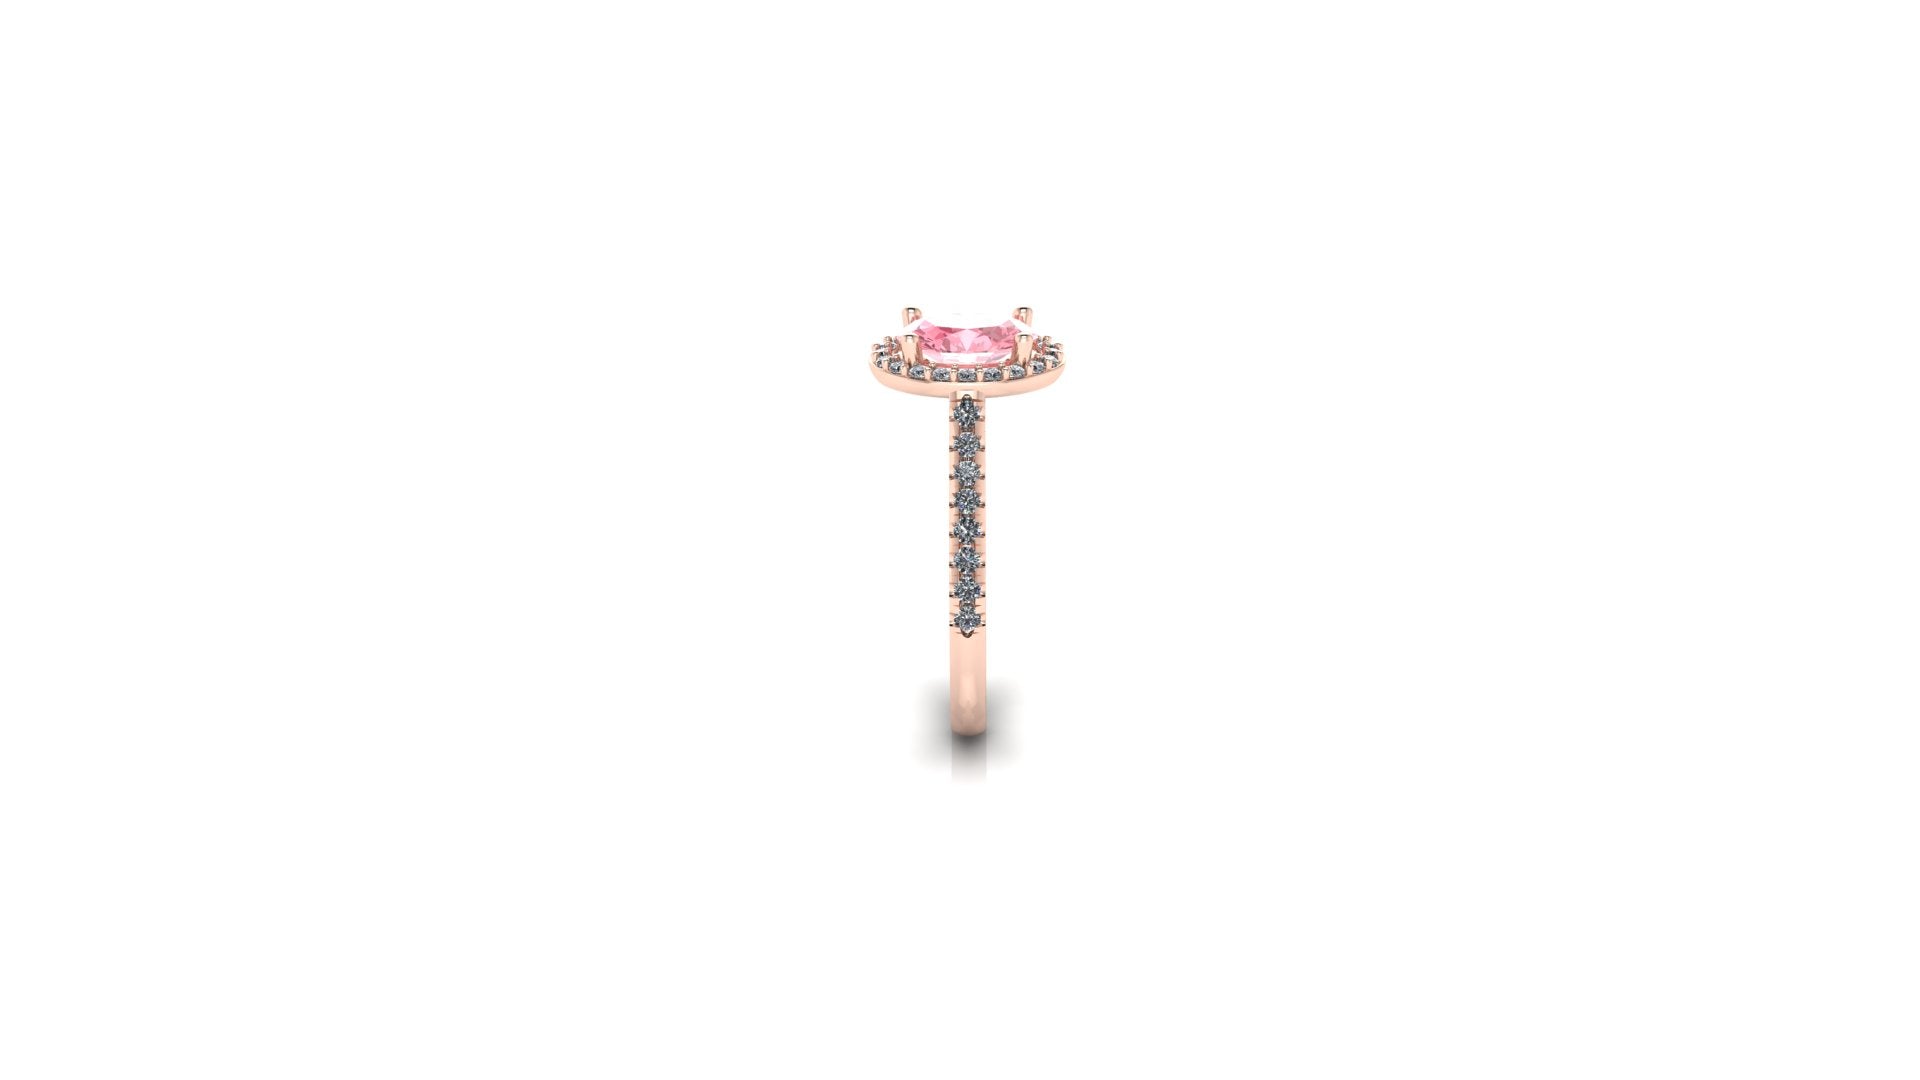 Bella Ring - The Village Jeweler